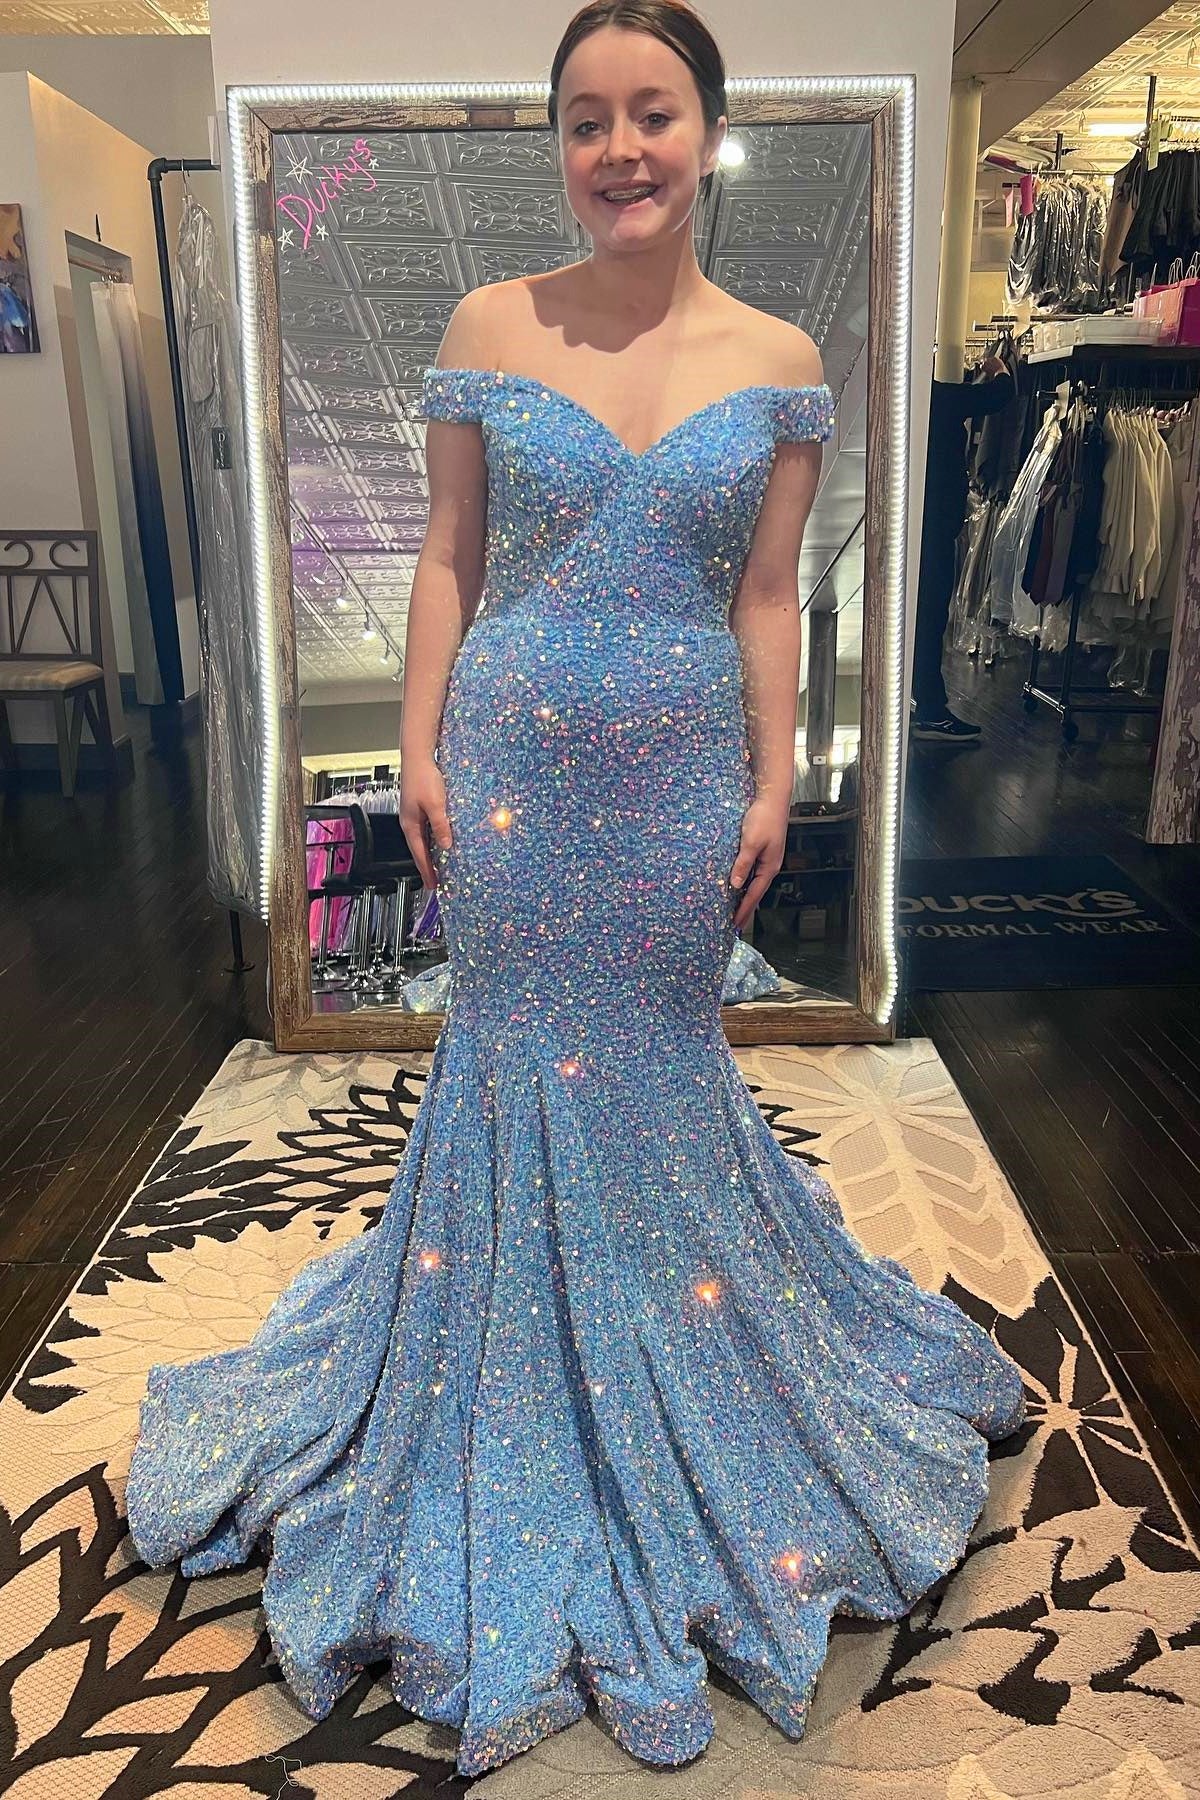 Blue Iridescent Sequin Off-the-Shoulder Trumpet Prom Dress